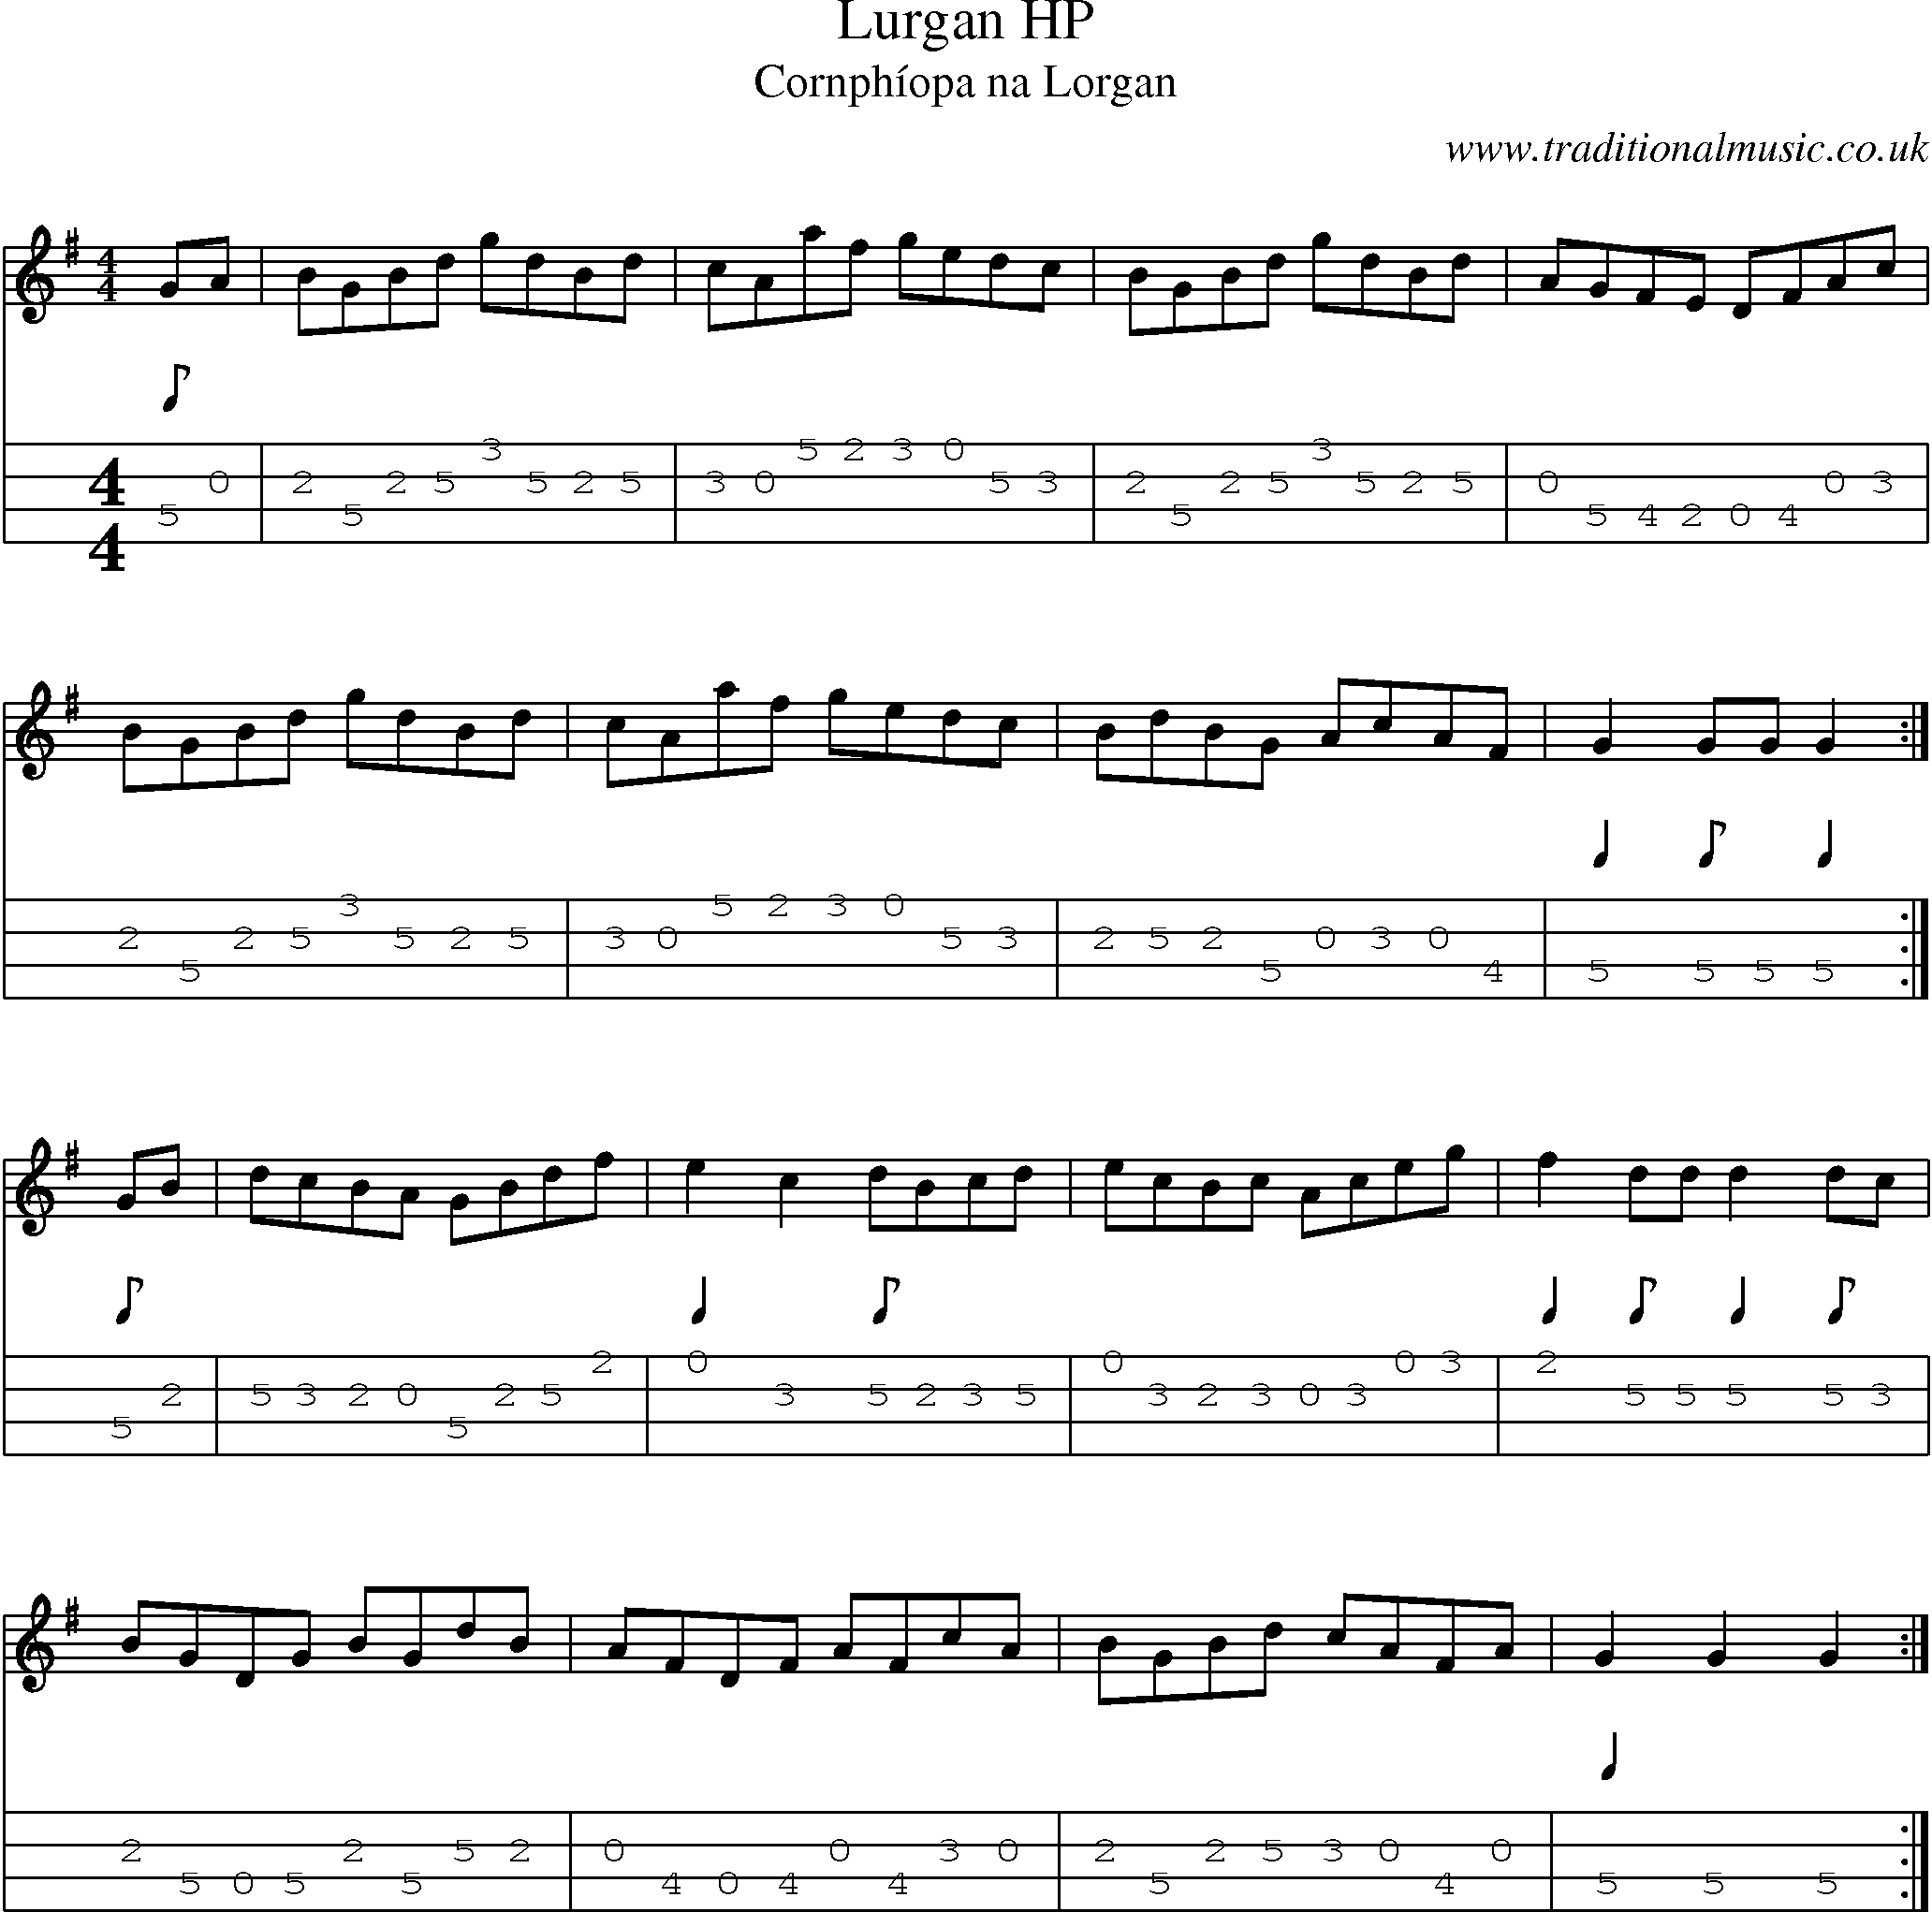 Music Score and Mandolin Tabs for Lurgan